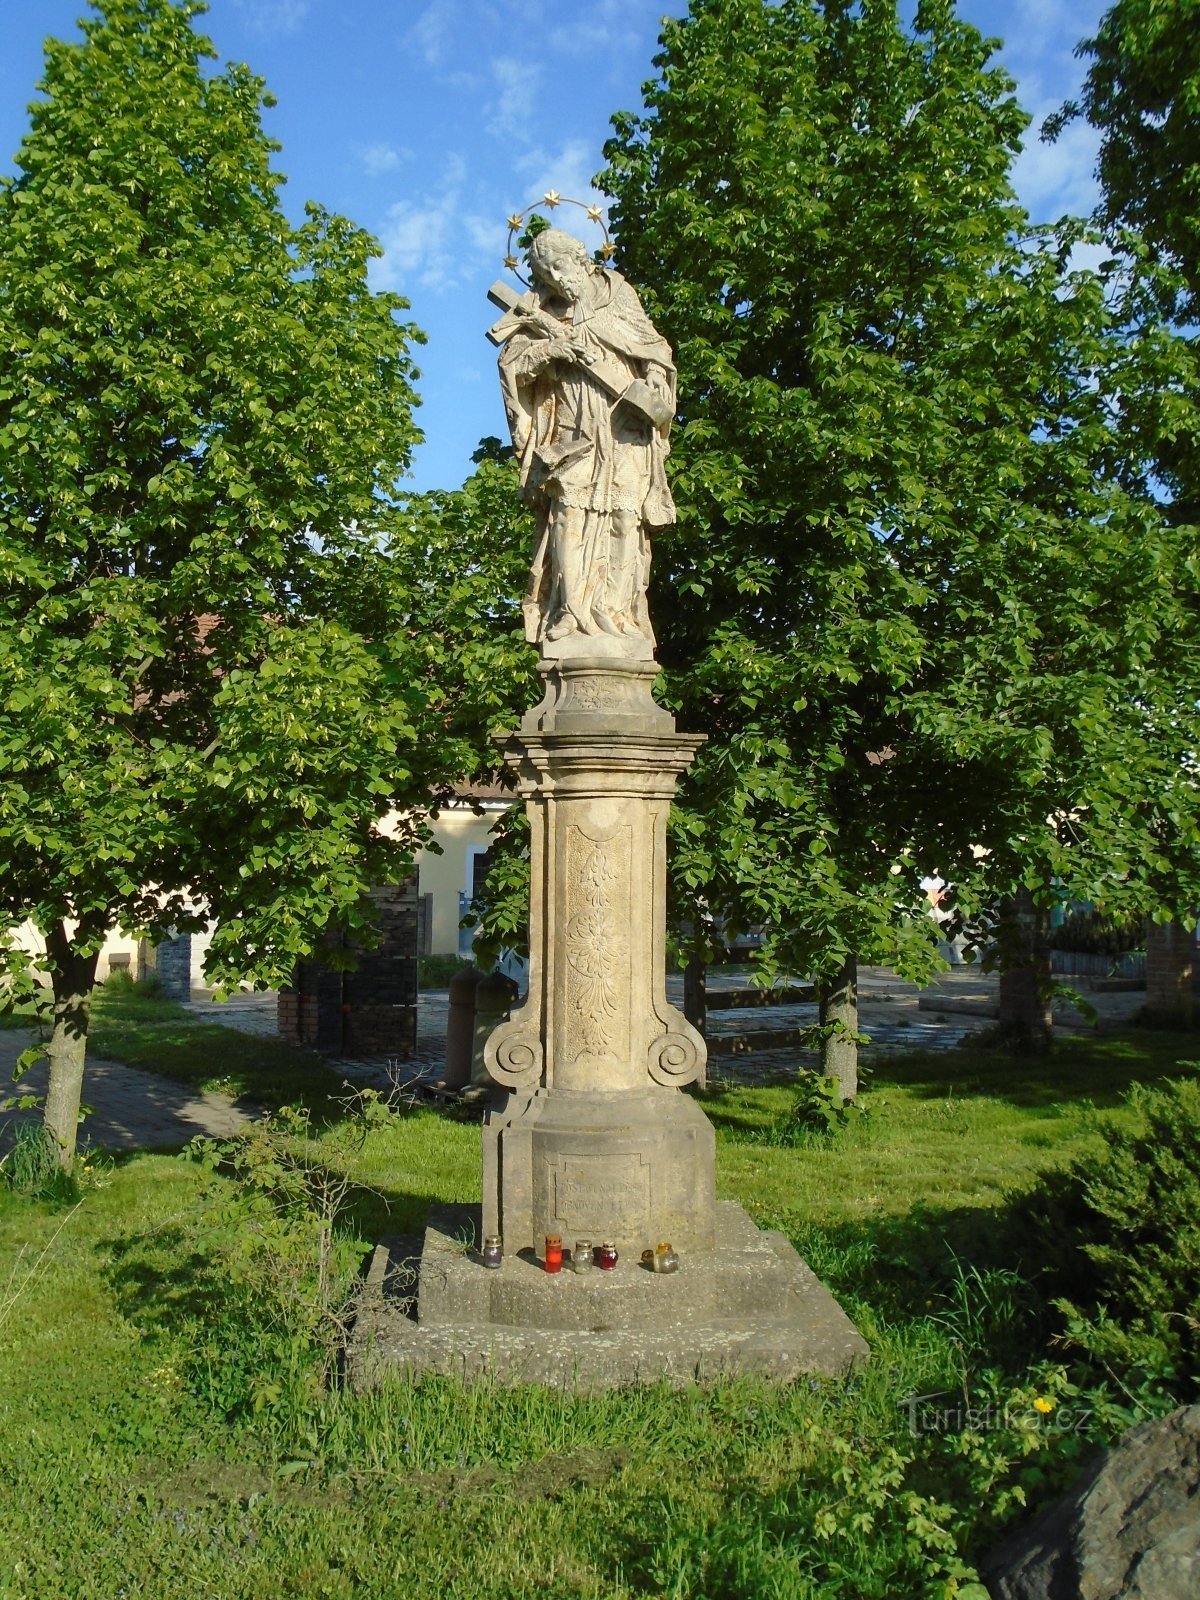 Statuia Sf. Ioan din Nepomuck în Správčice (Hradec Králové)